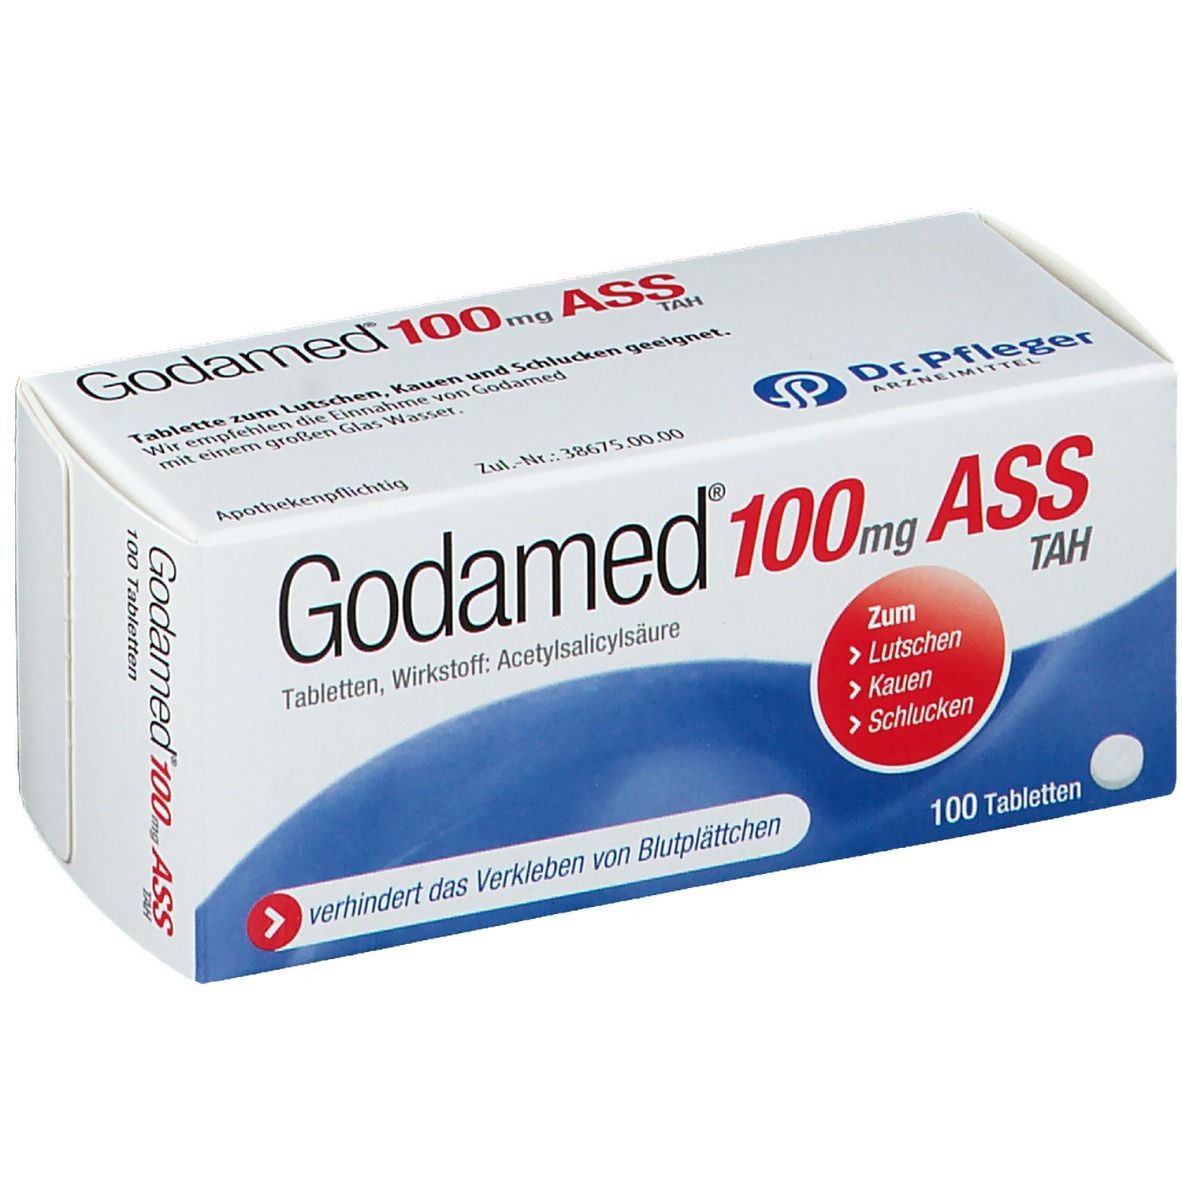 Godamed® 100 mg ASS TAH